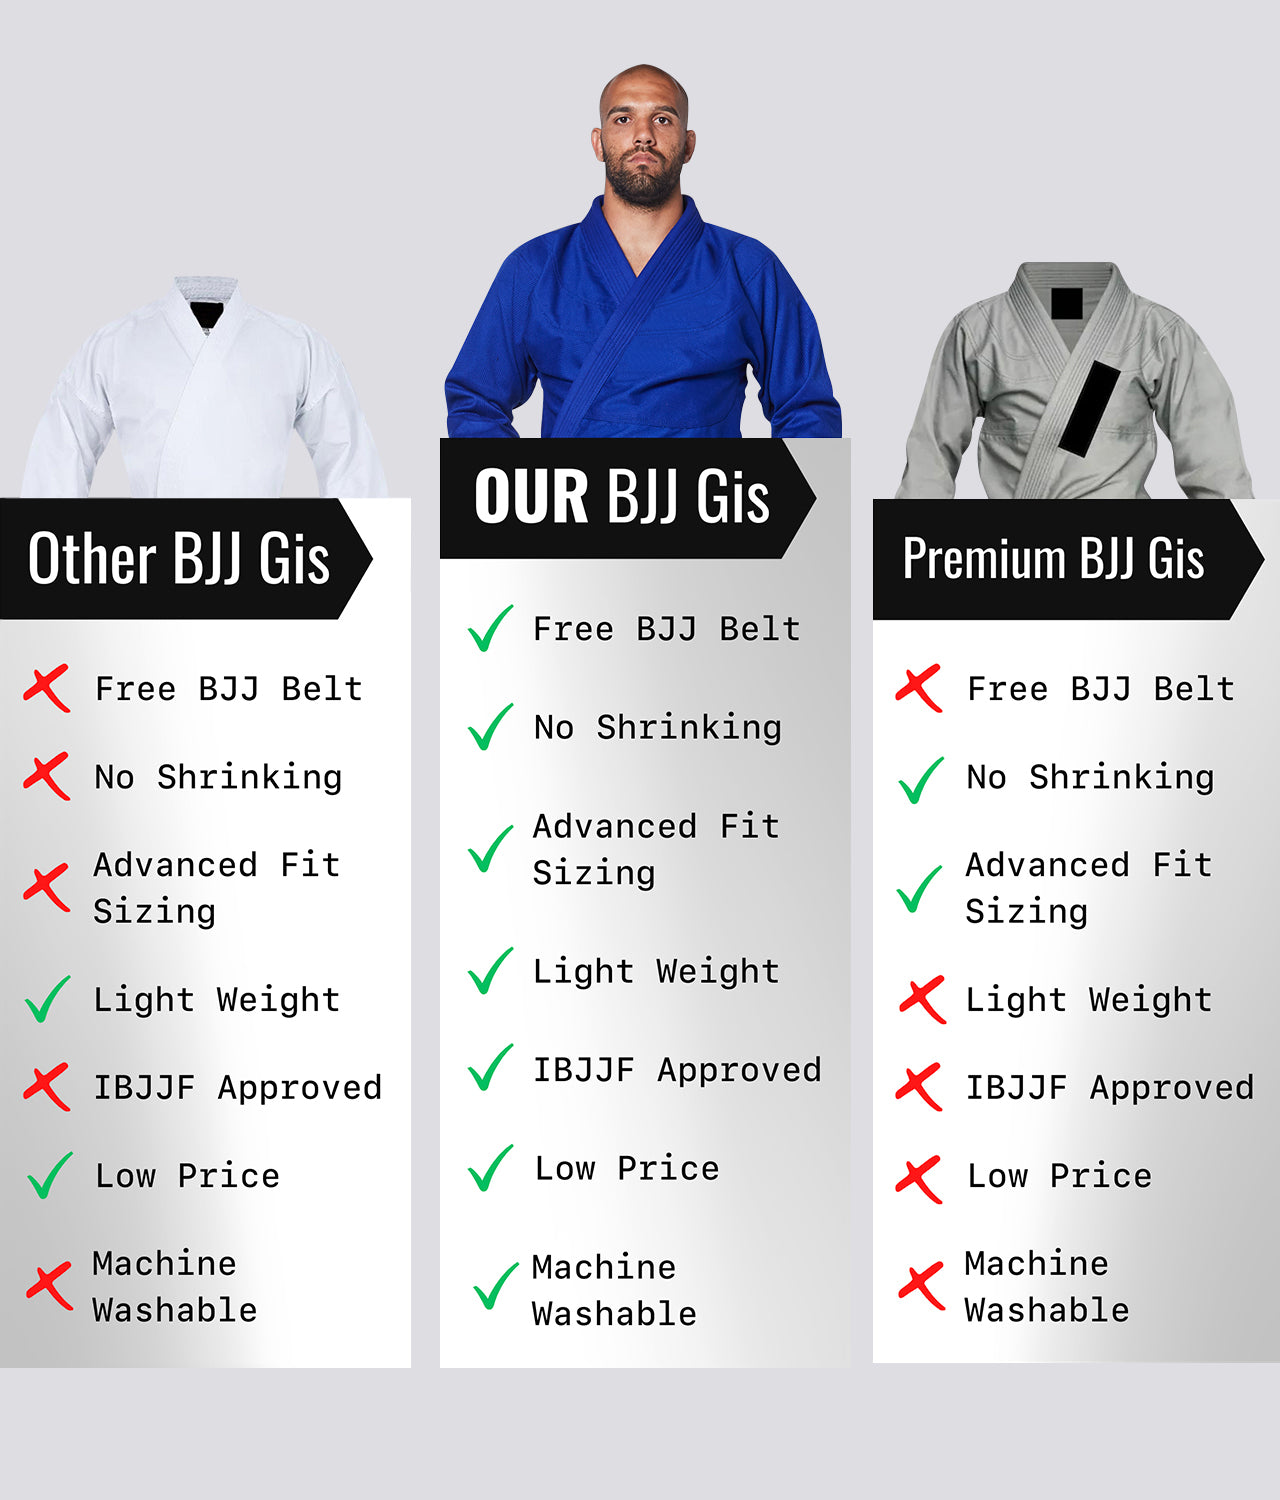 Elite Sports Men's Essential Blue Brazilian Jiu Jitsu BJJ Gi Comparison